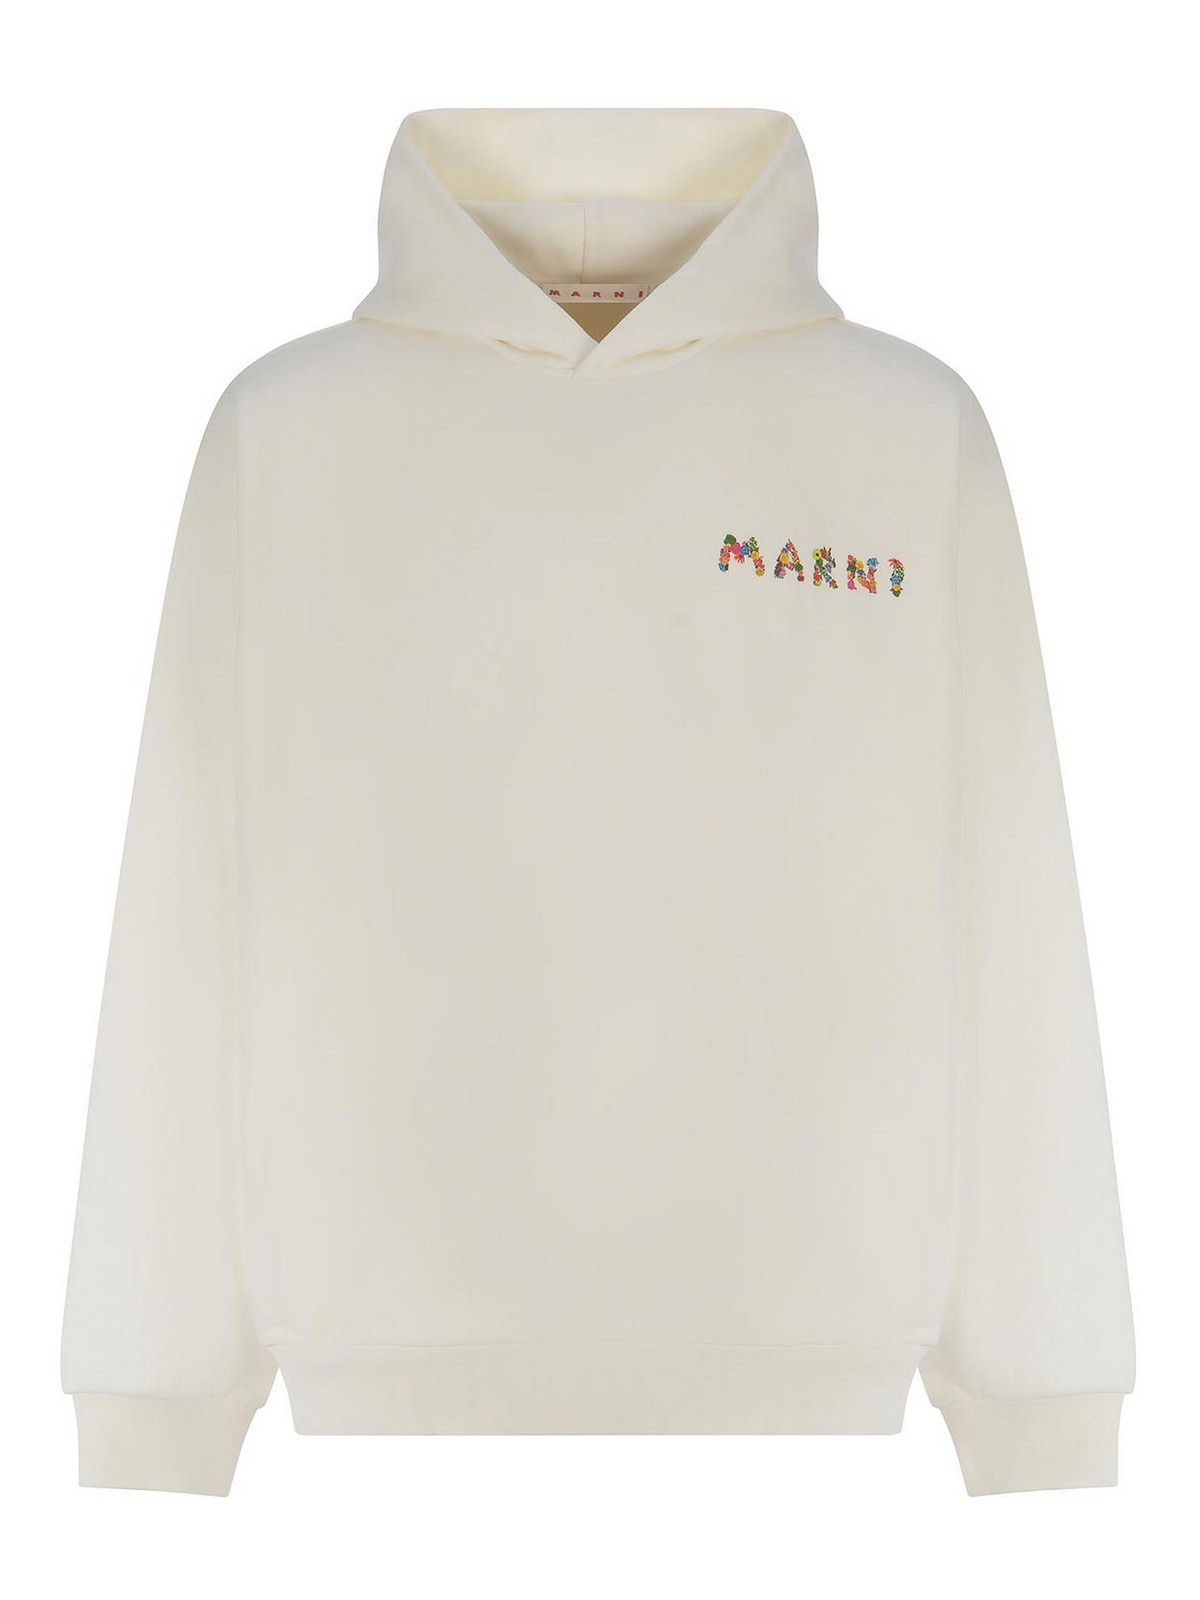 Marni Hooded Sweatshirt   Made Of Cotton In Beige